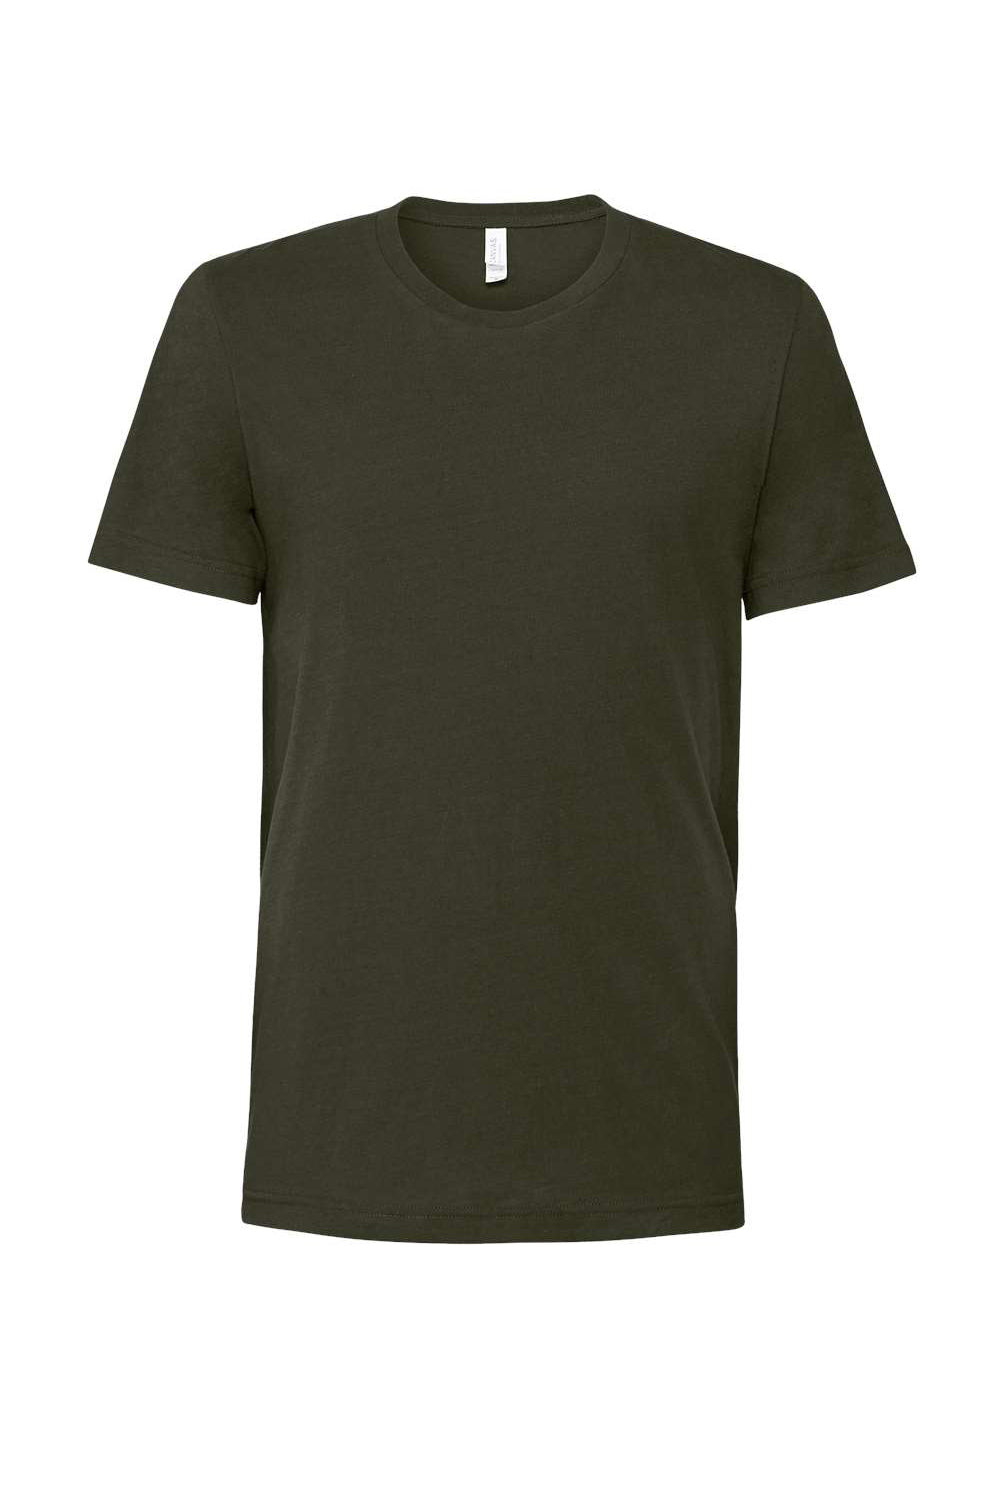 Bella + Canvas BC3001/3001C Mens Jersey Short Sleeve Crewneck T-Shirt Dark Olive Green Flat Front